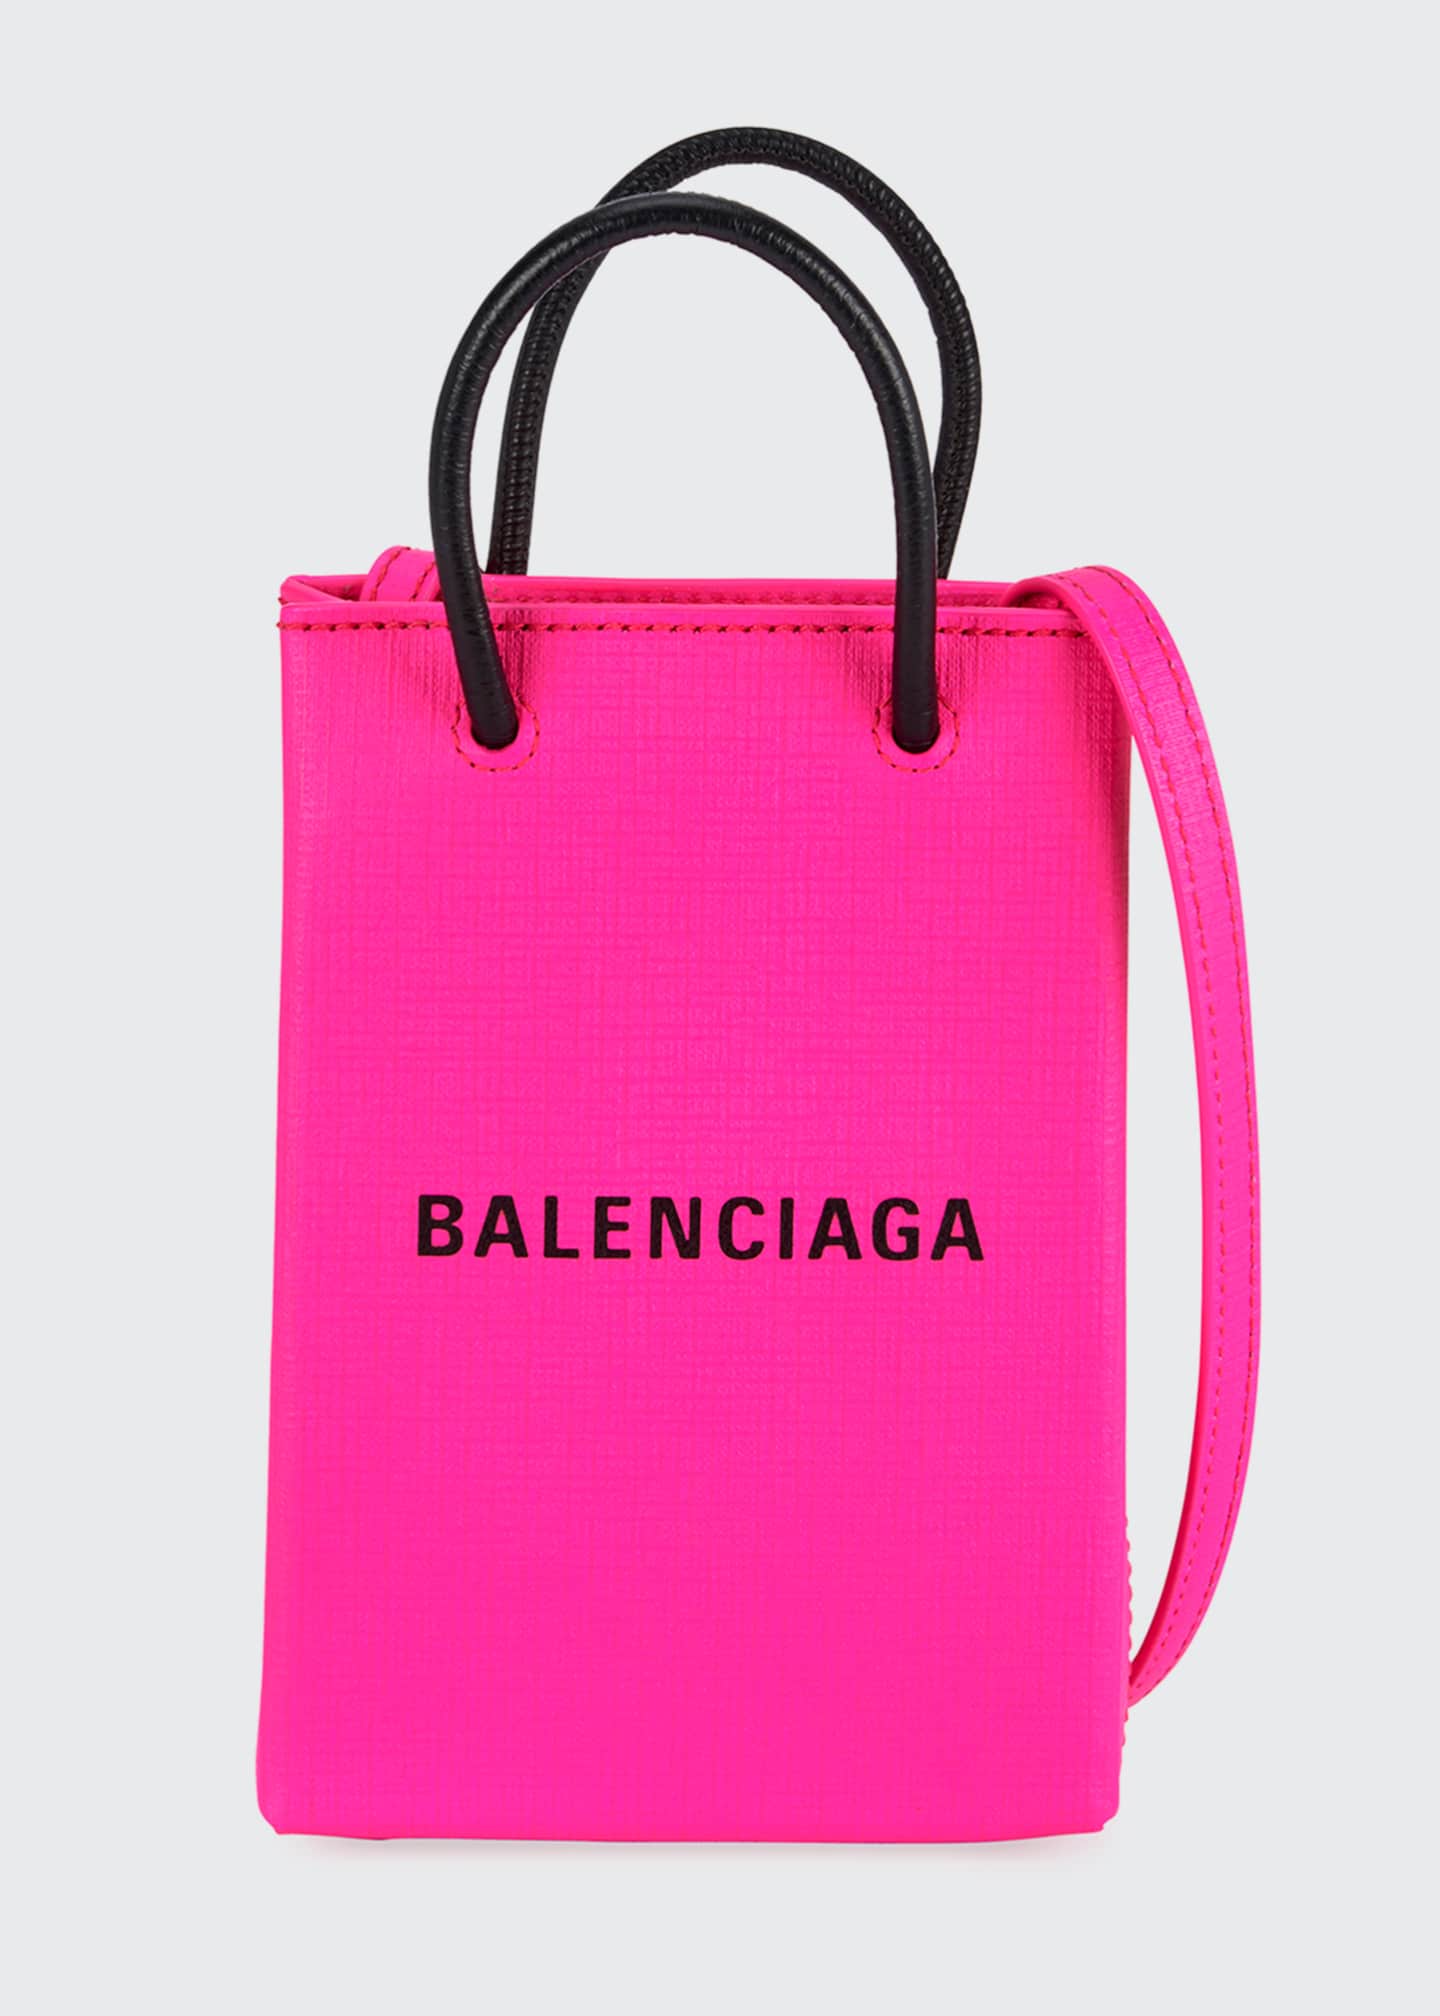 Balenciaga Shopp Phone/Crossbody Bag - Bergdorf Goodman